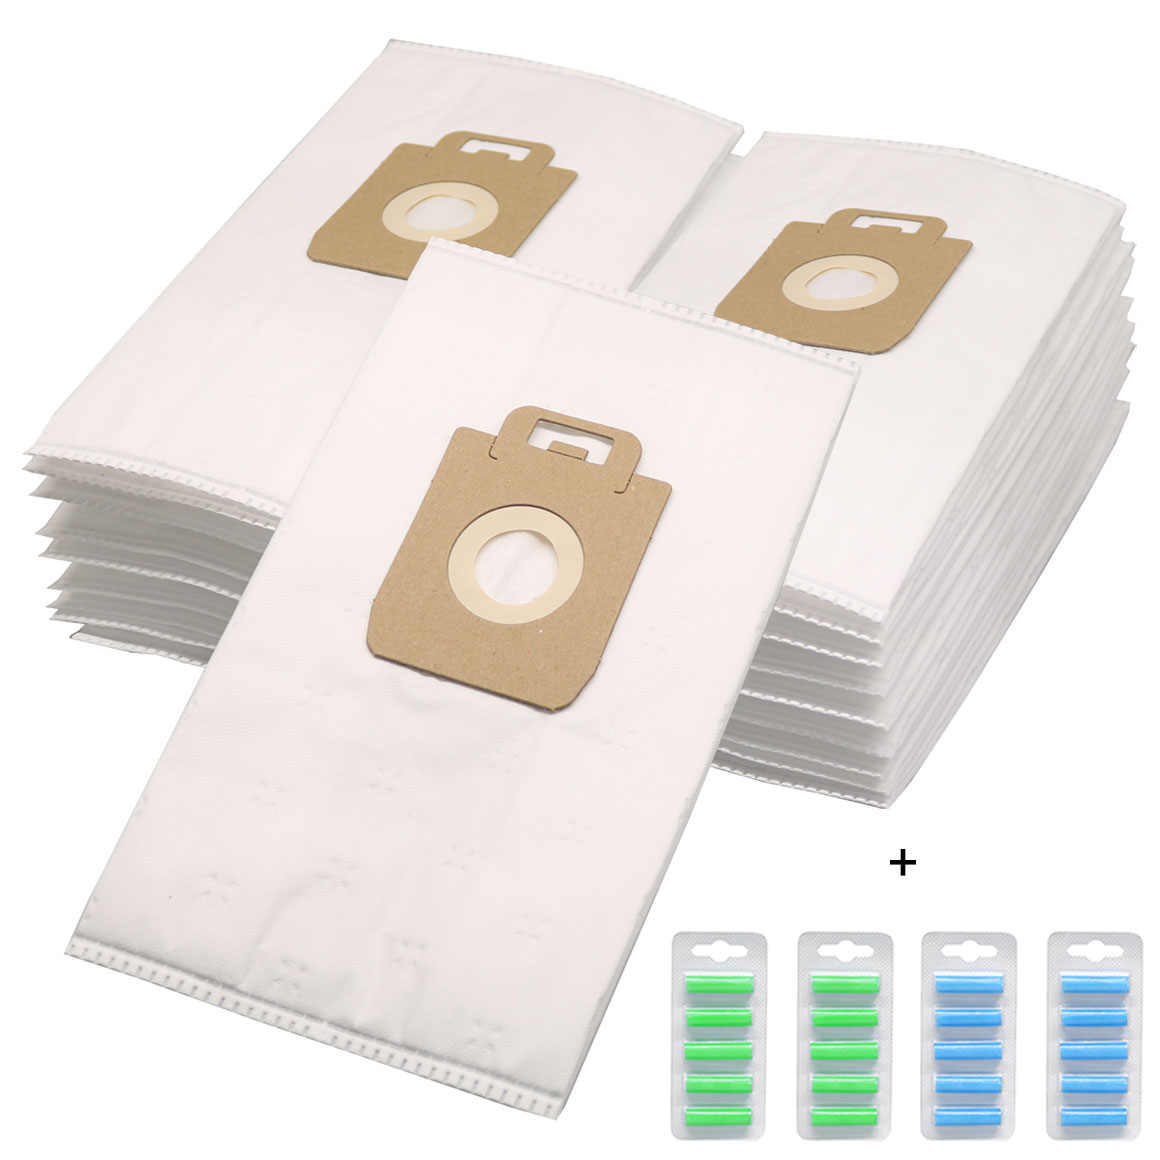 Nilfisk King series 3-D stofzuigerzakken 20 stuks + 20 geurstaafjes + gratis filters (eigen merk)